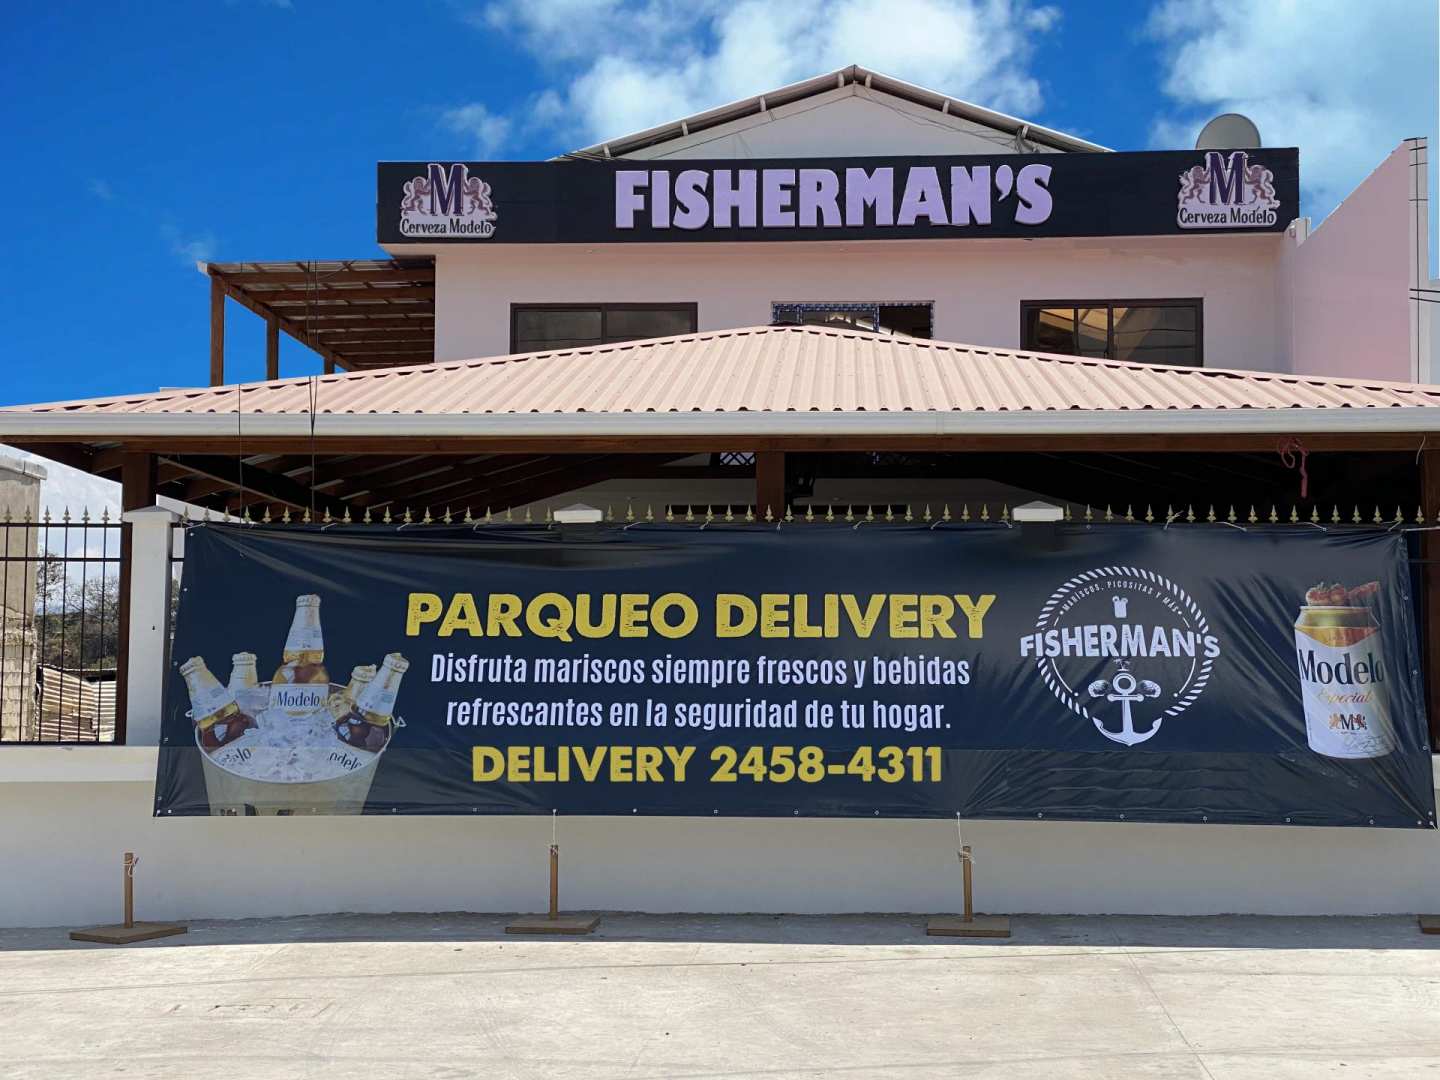 Fisherman's